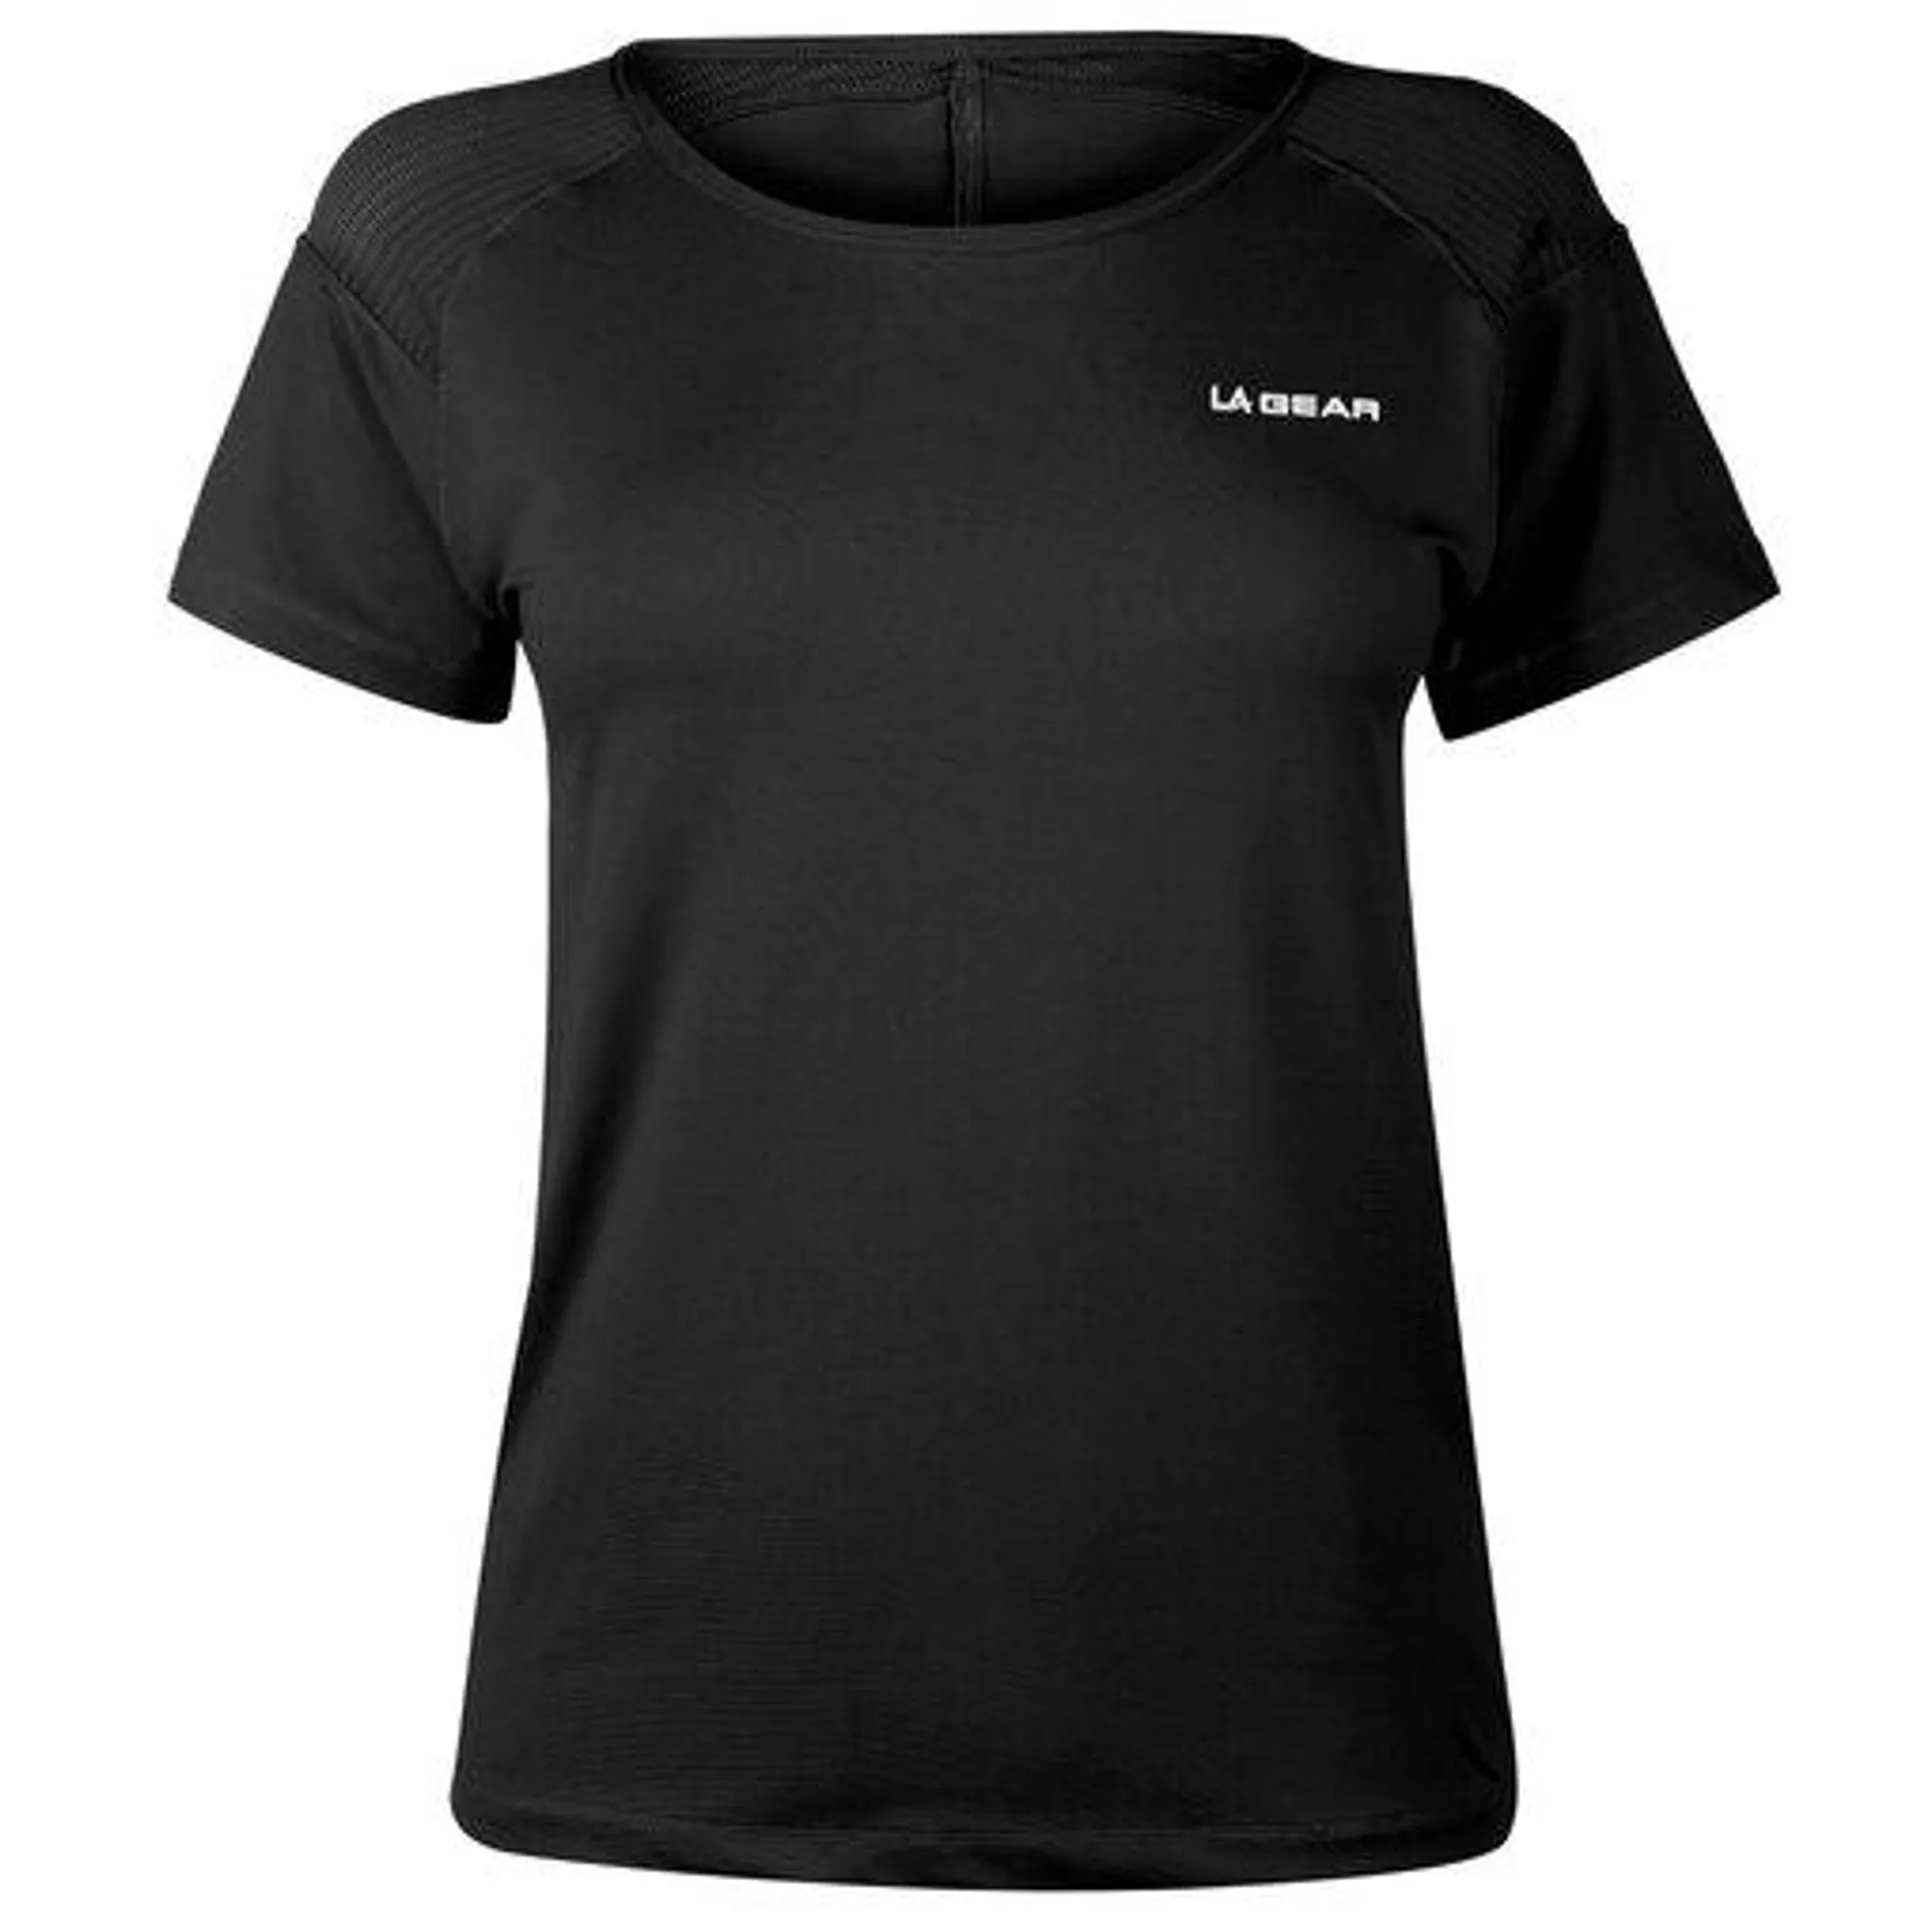 LA Gear Fitted T Shirt